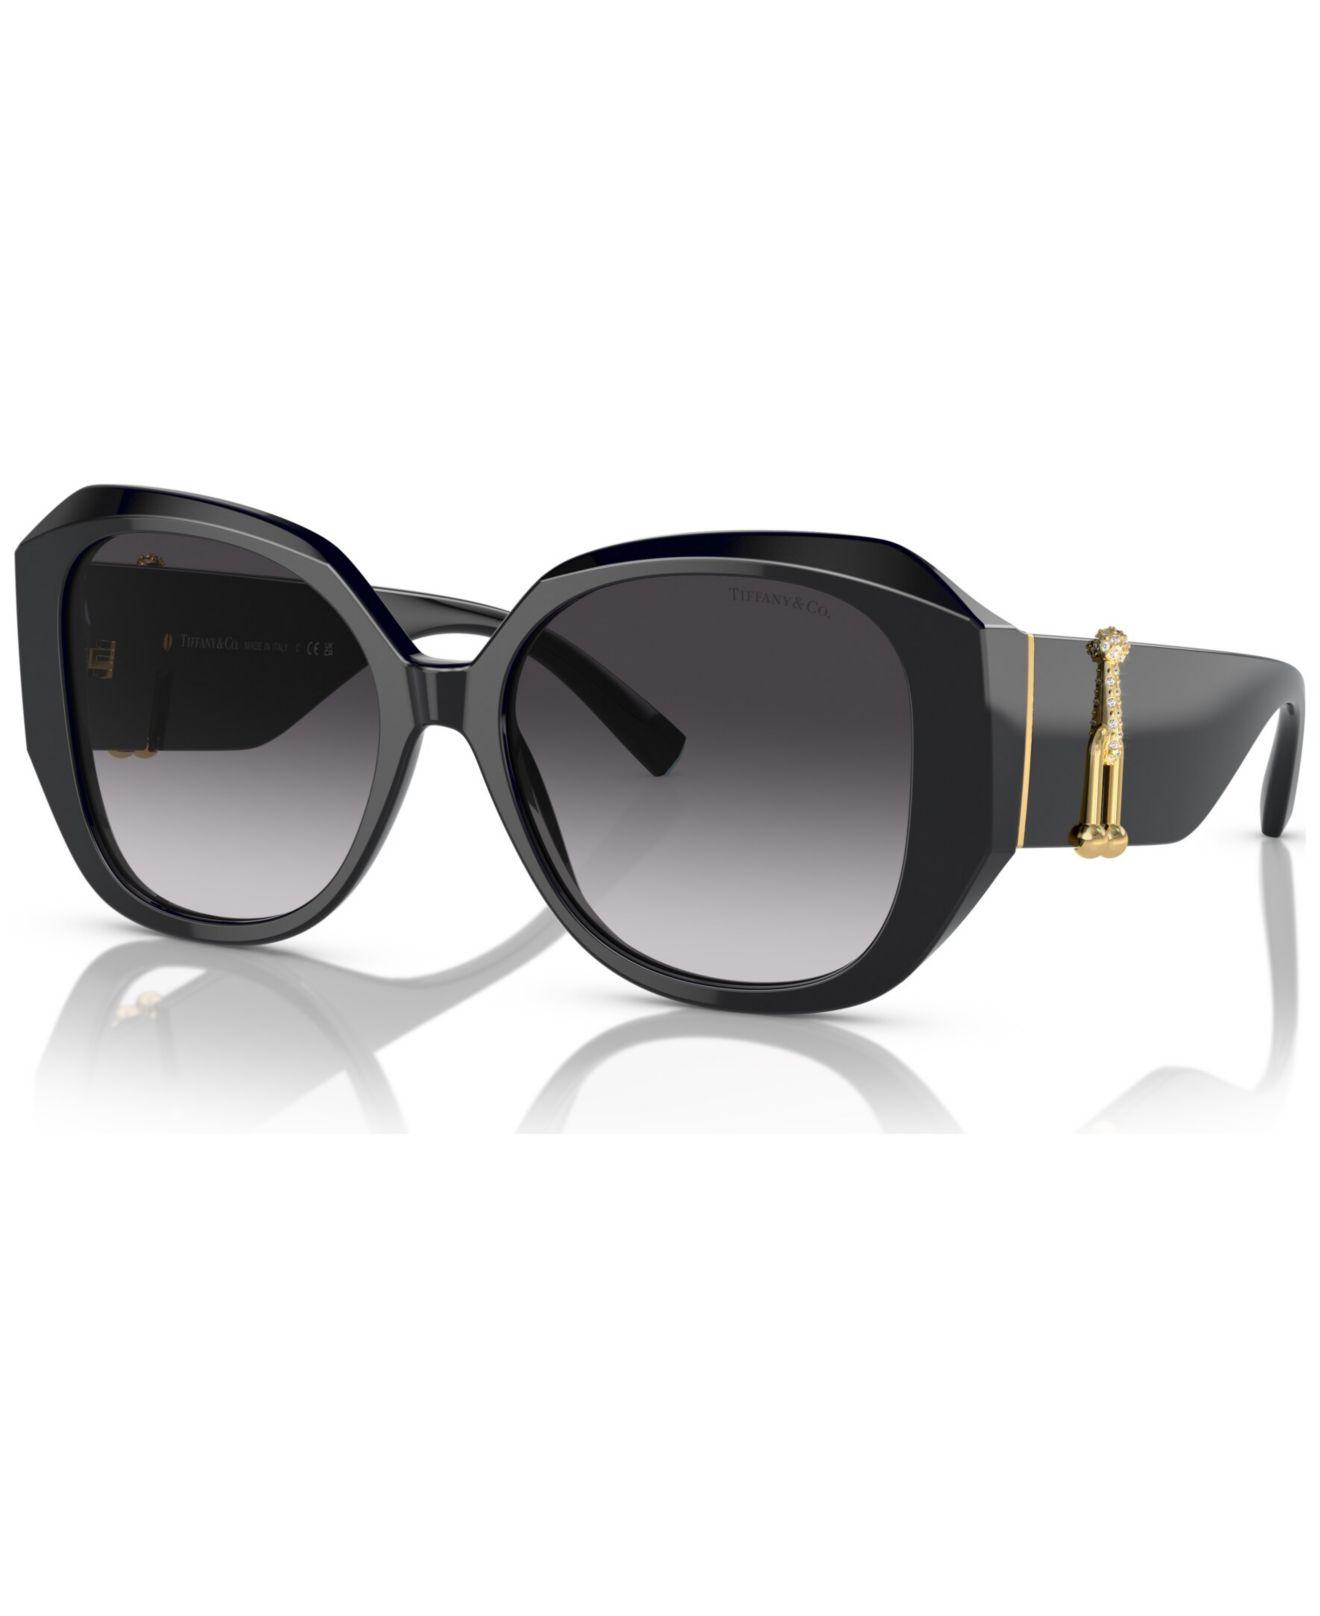 Tiffany & Co. Sunglasses, Tf4207b in Black | Lyst